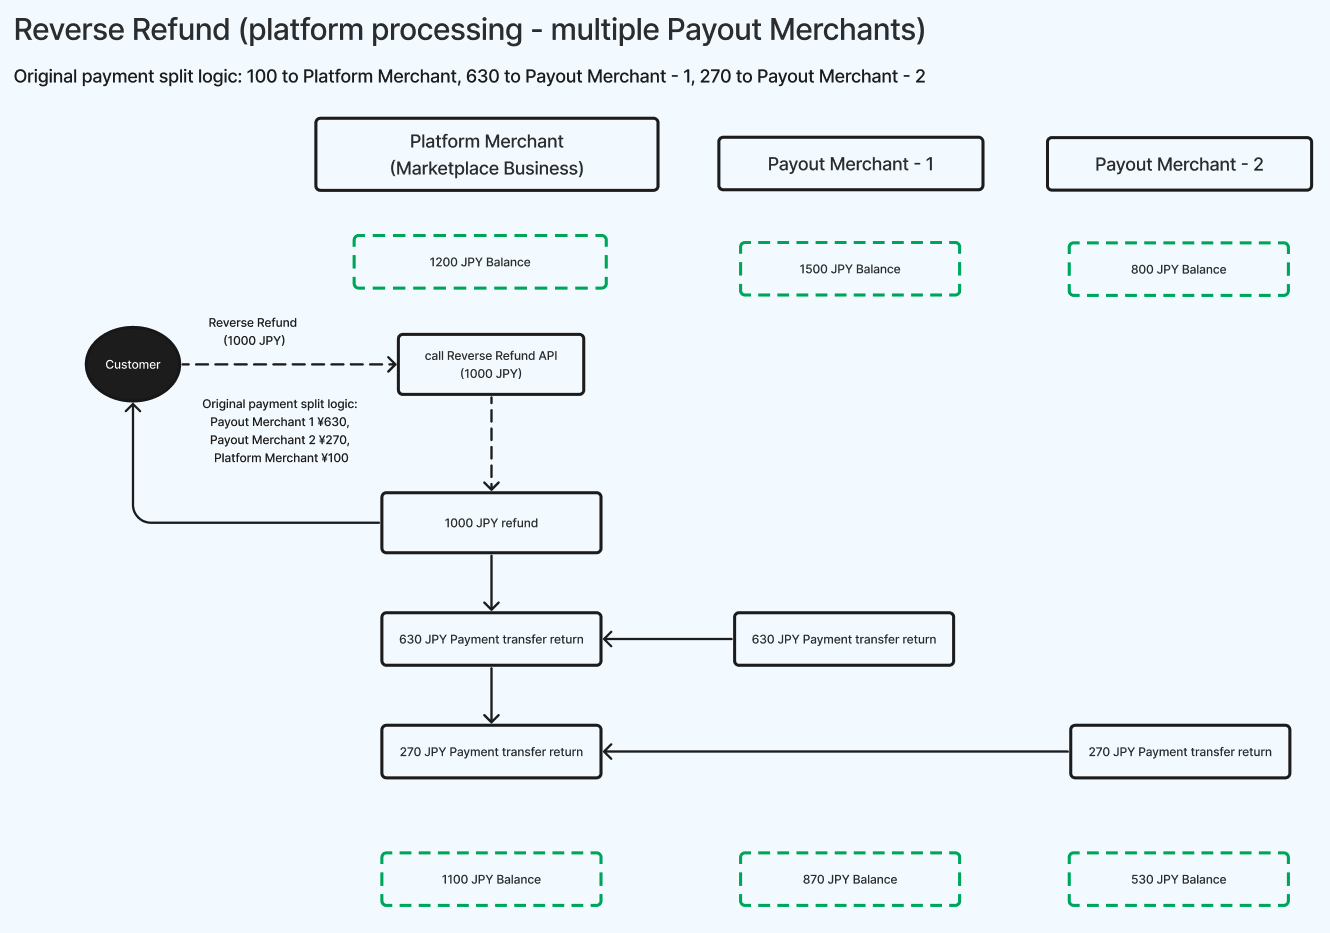 Reverse Refund (platform processing - multiple Payout Merchants)